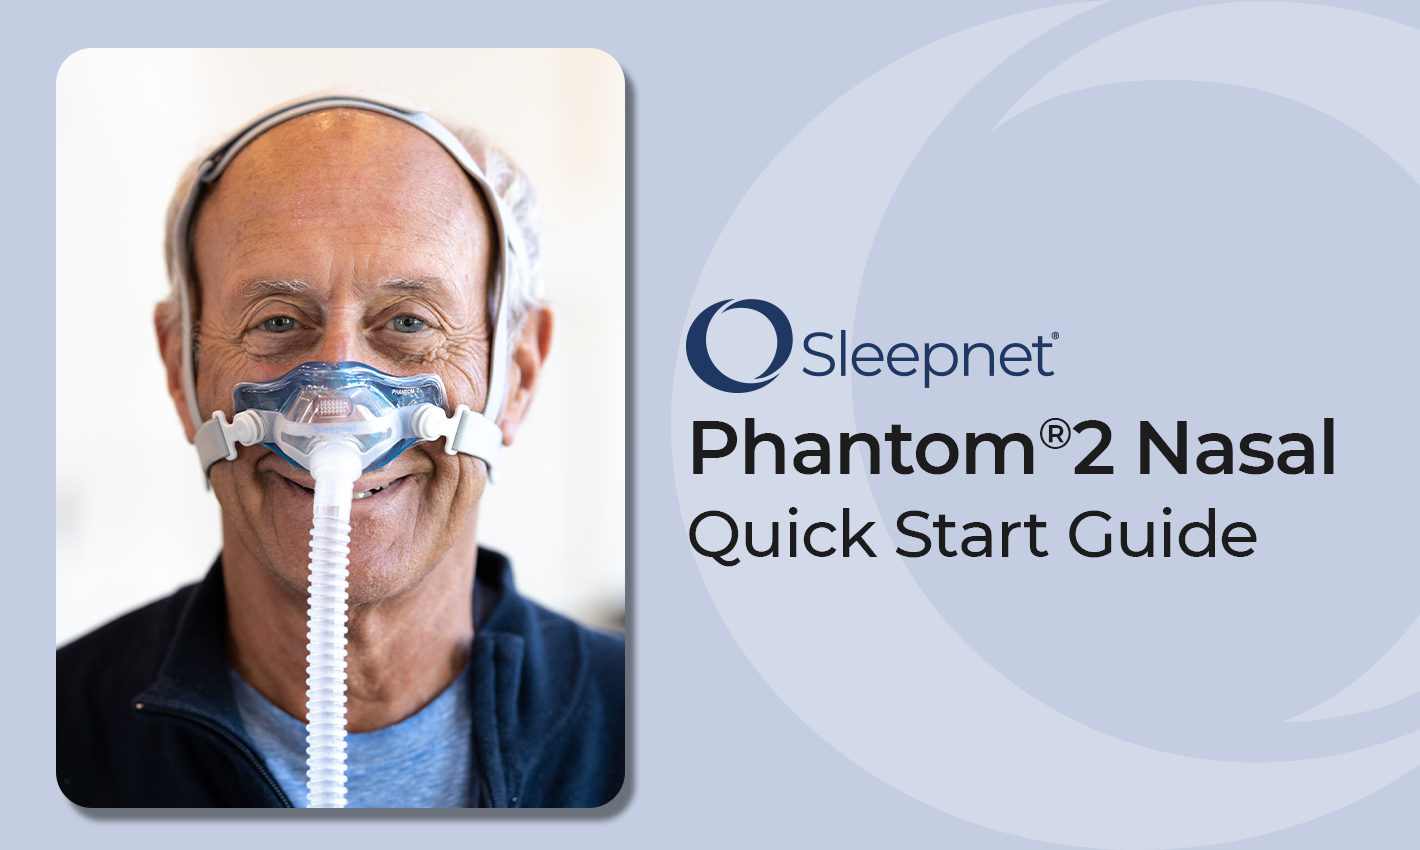 Sleepnet Phantom 2 Nasal Quick Start Guide